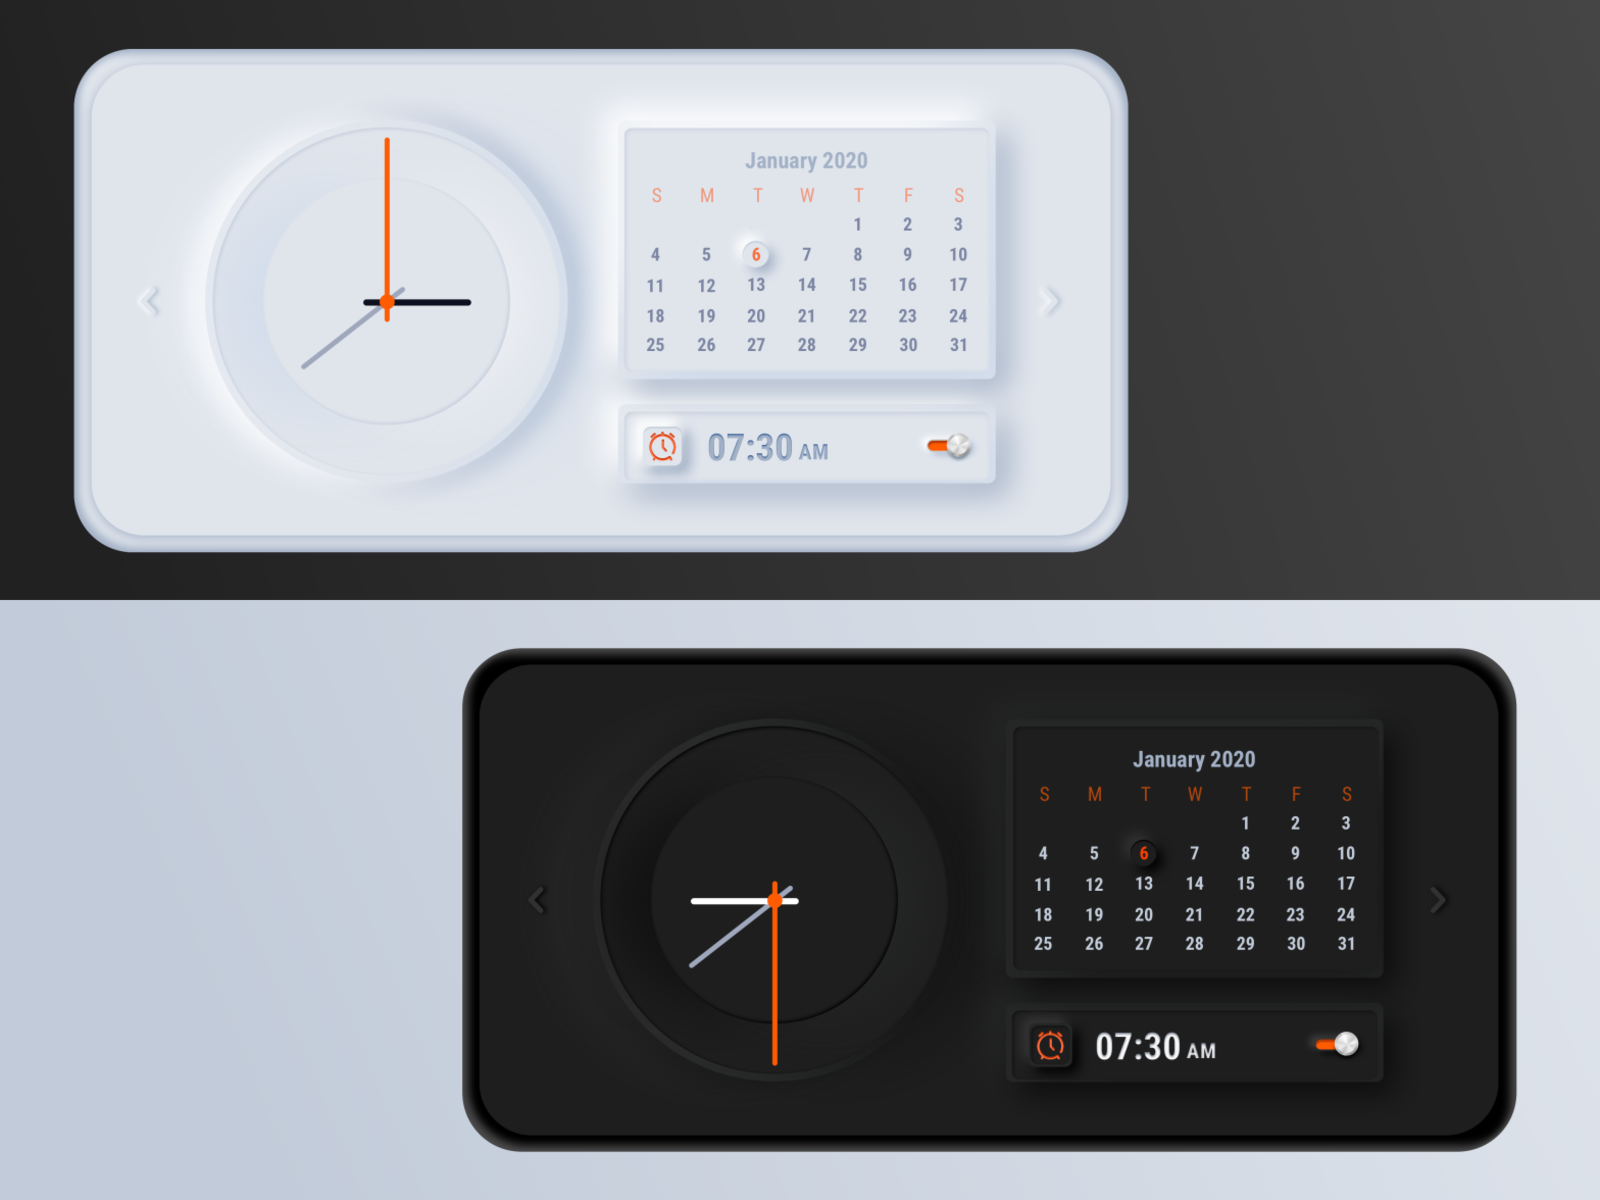 Clocks & calendar widgets by Jas Chen on Dribbble